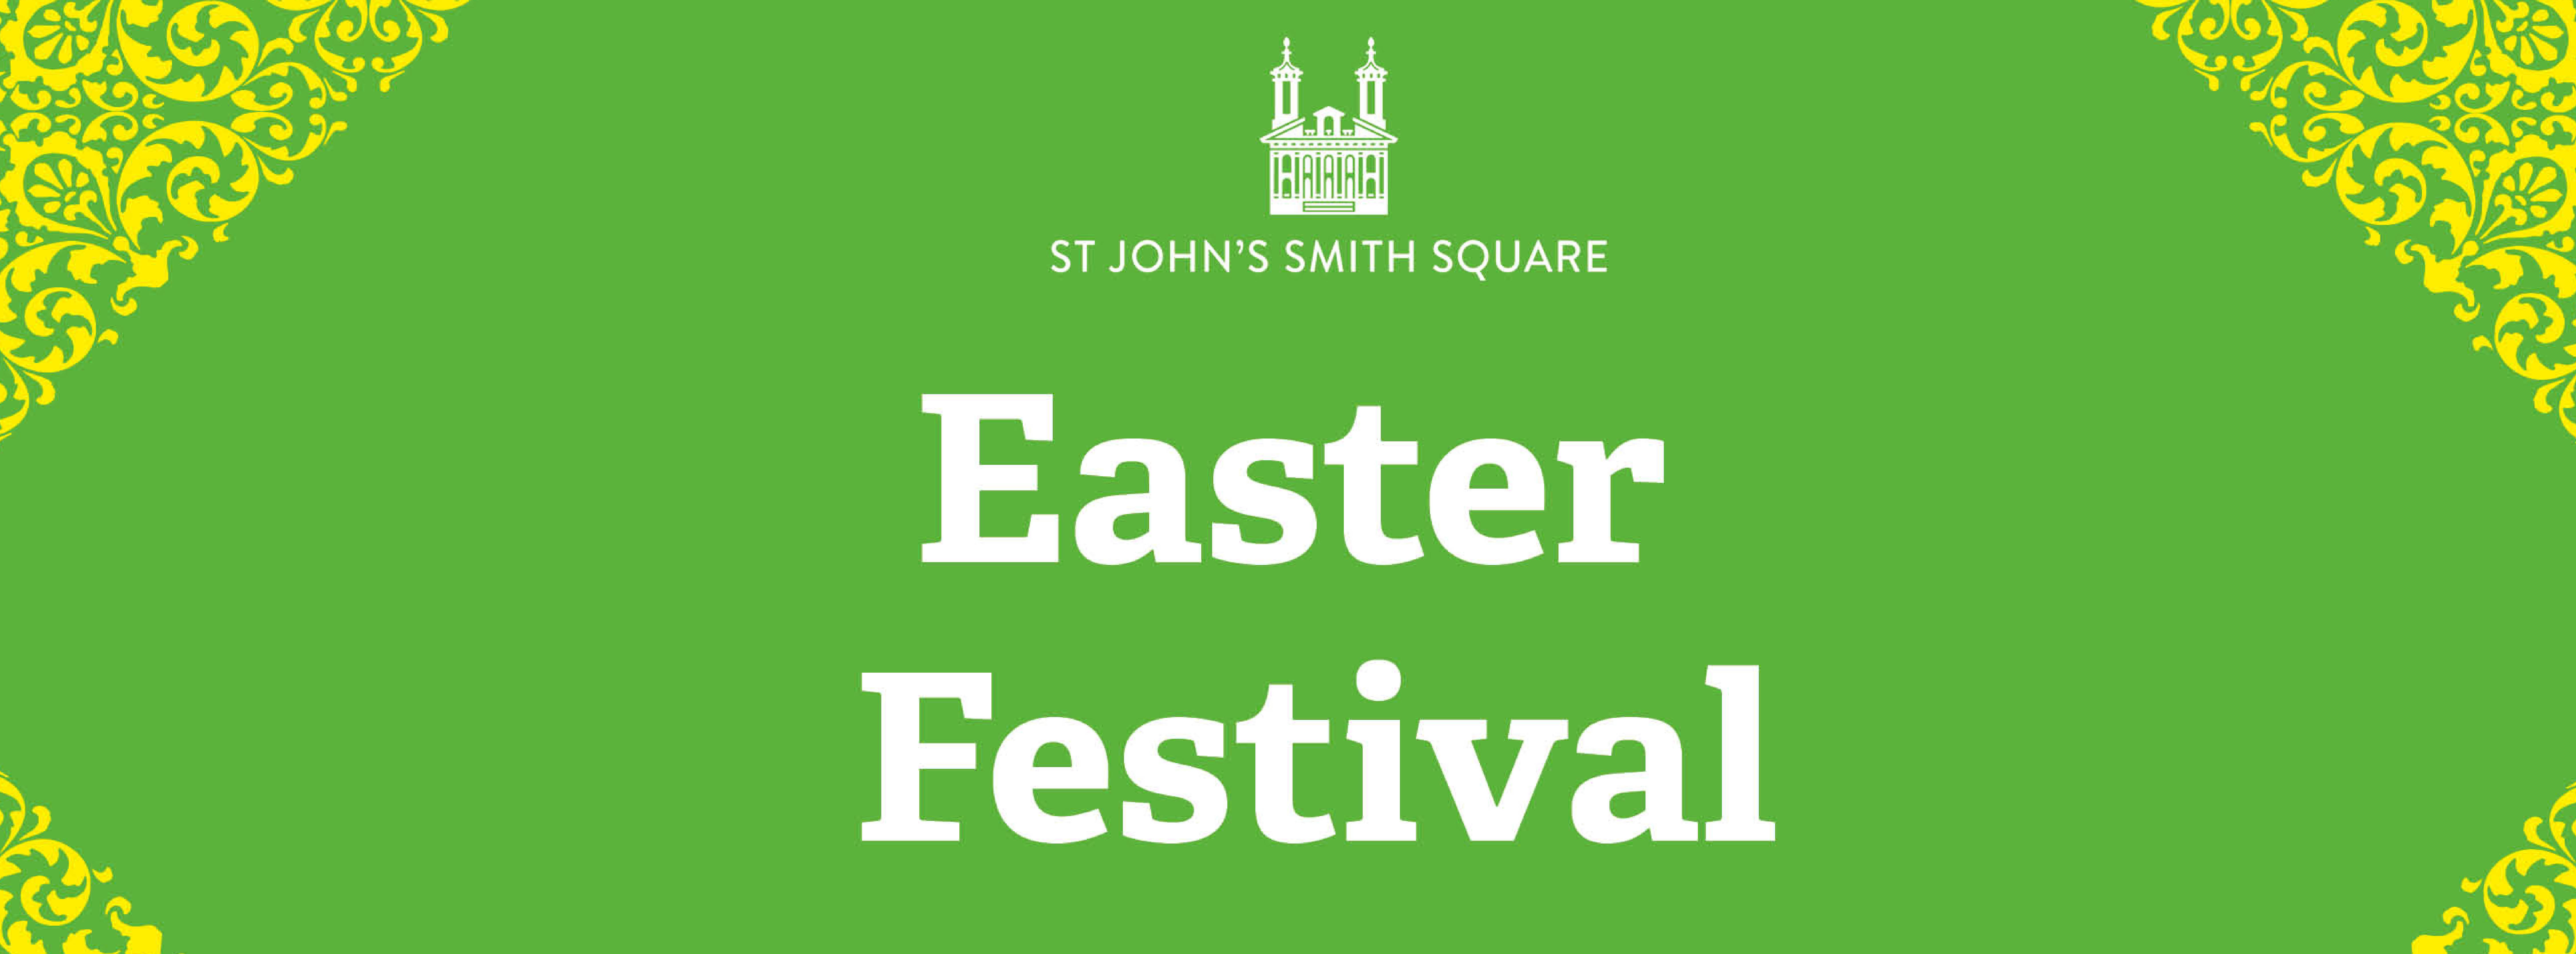 Easter Festival at St John's Smith Square